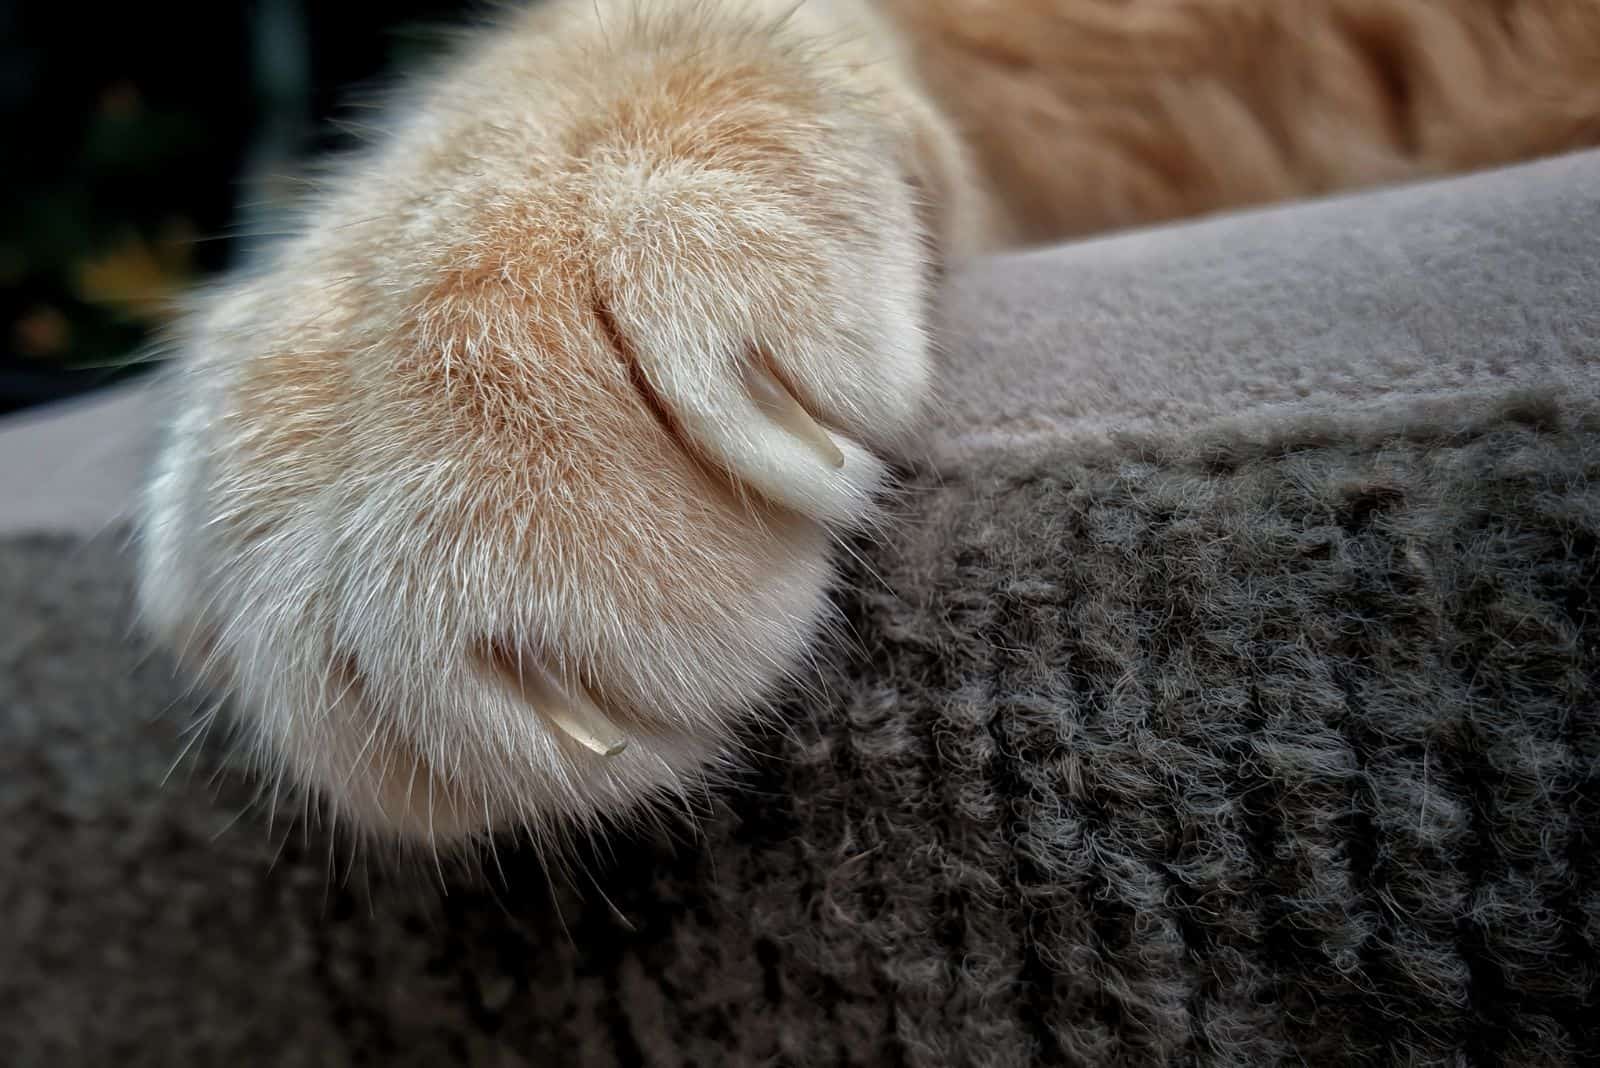 brittle claws in a cat